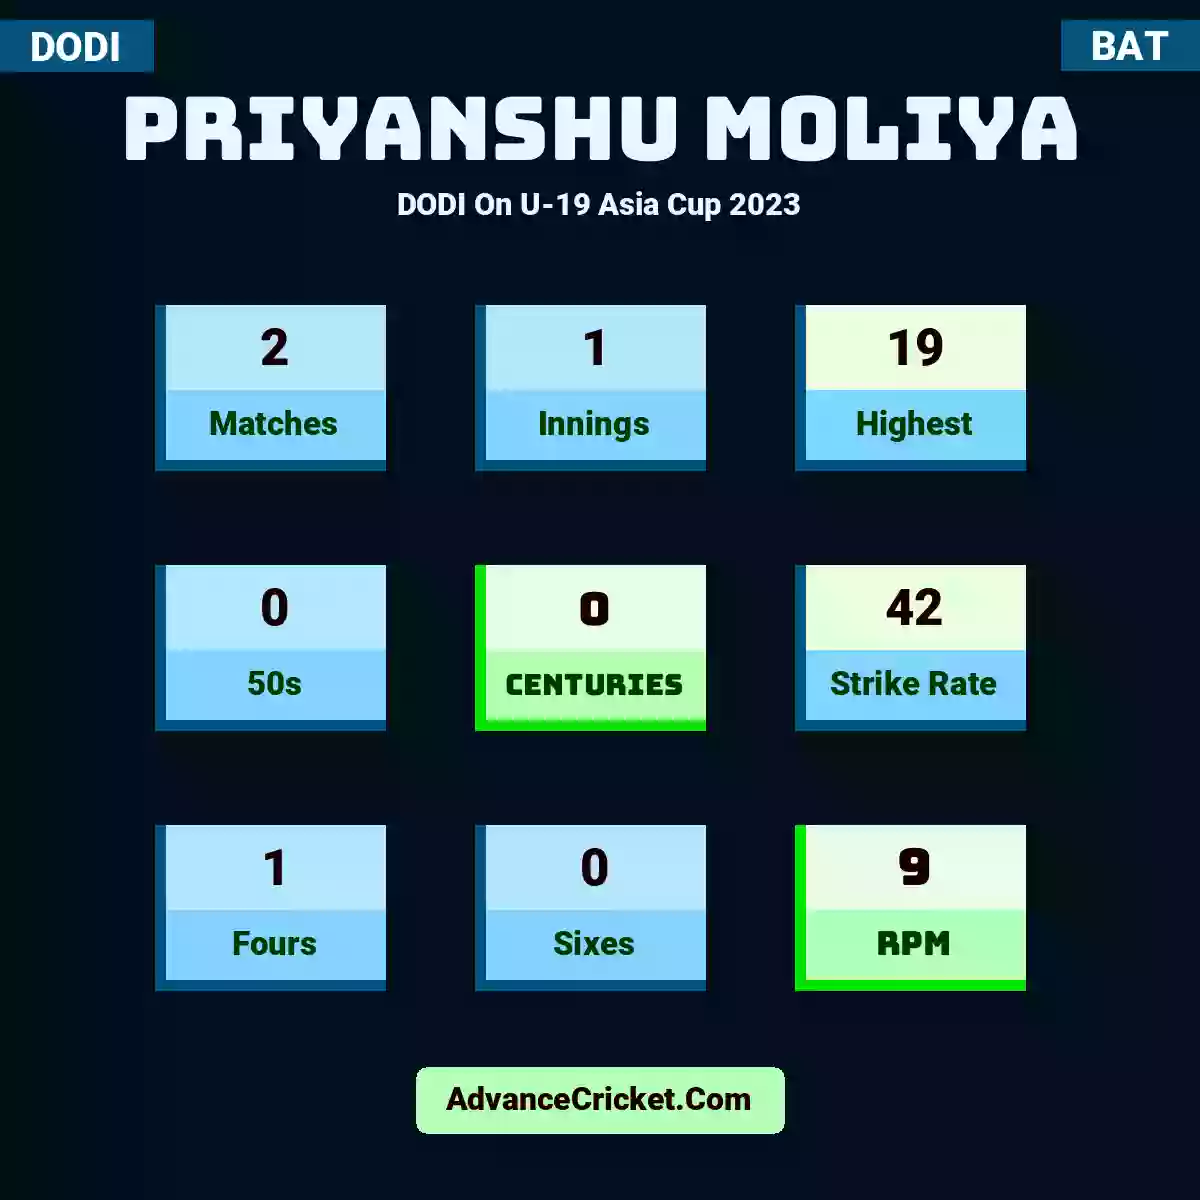 Priyanshu Moliya DODI  On U-19 Asia Cup 2023, Priyanshu Moliya played 2 matches, scored 19 runs as highest, 0 half-centuries, and 0 centuries, with a strike rate of 42. P.Moliya hit 1 fours and 0 sixes, with an RPM of 9.